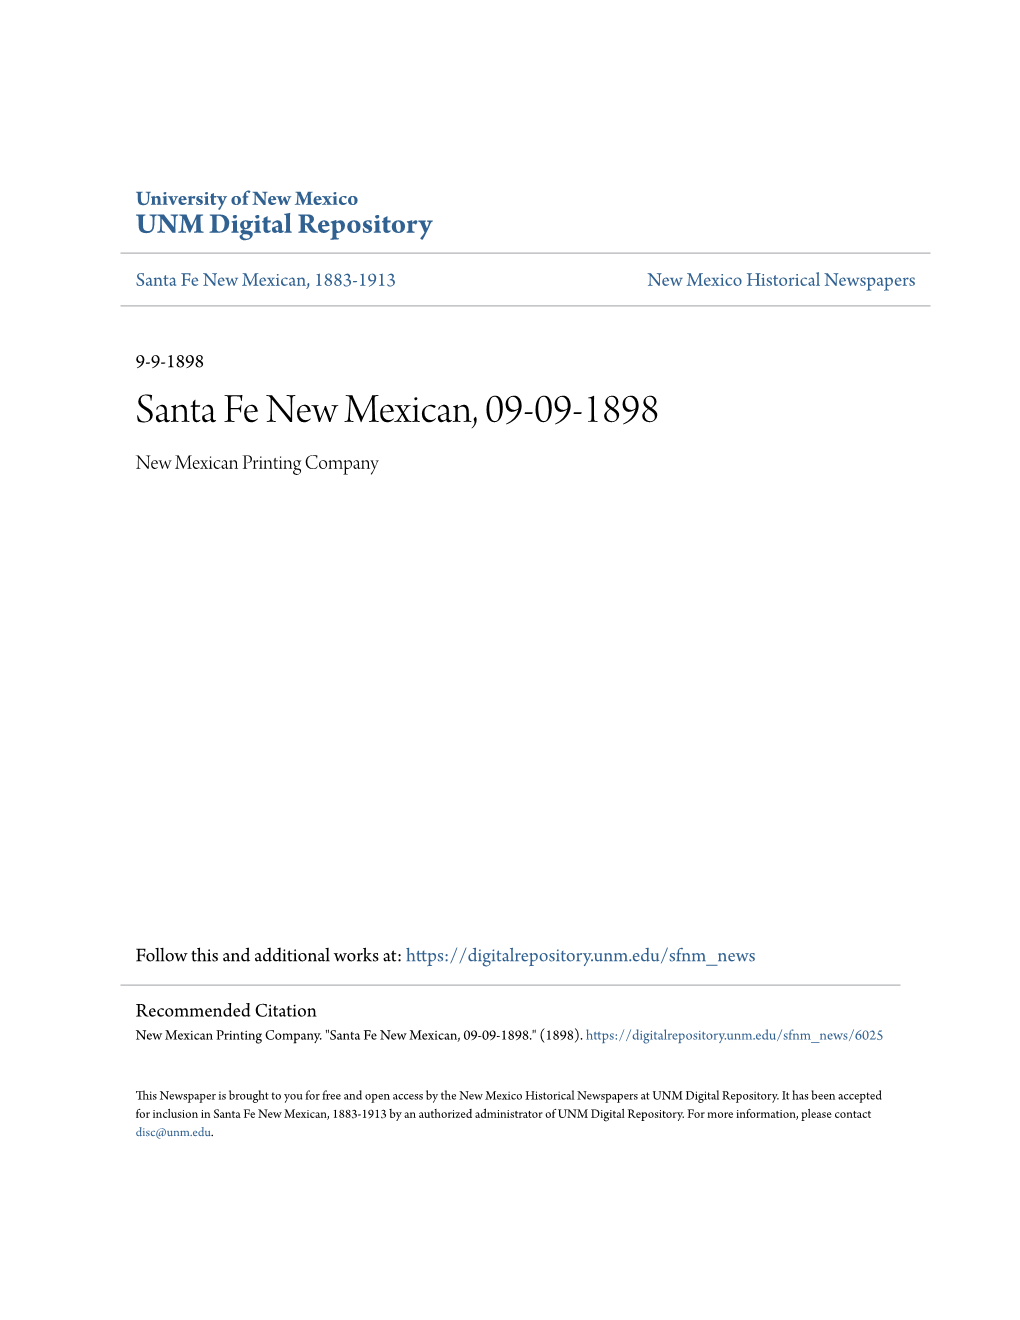 Santa Fe New Mexican, 09-09-1898 New Mexican Printing Company